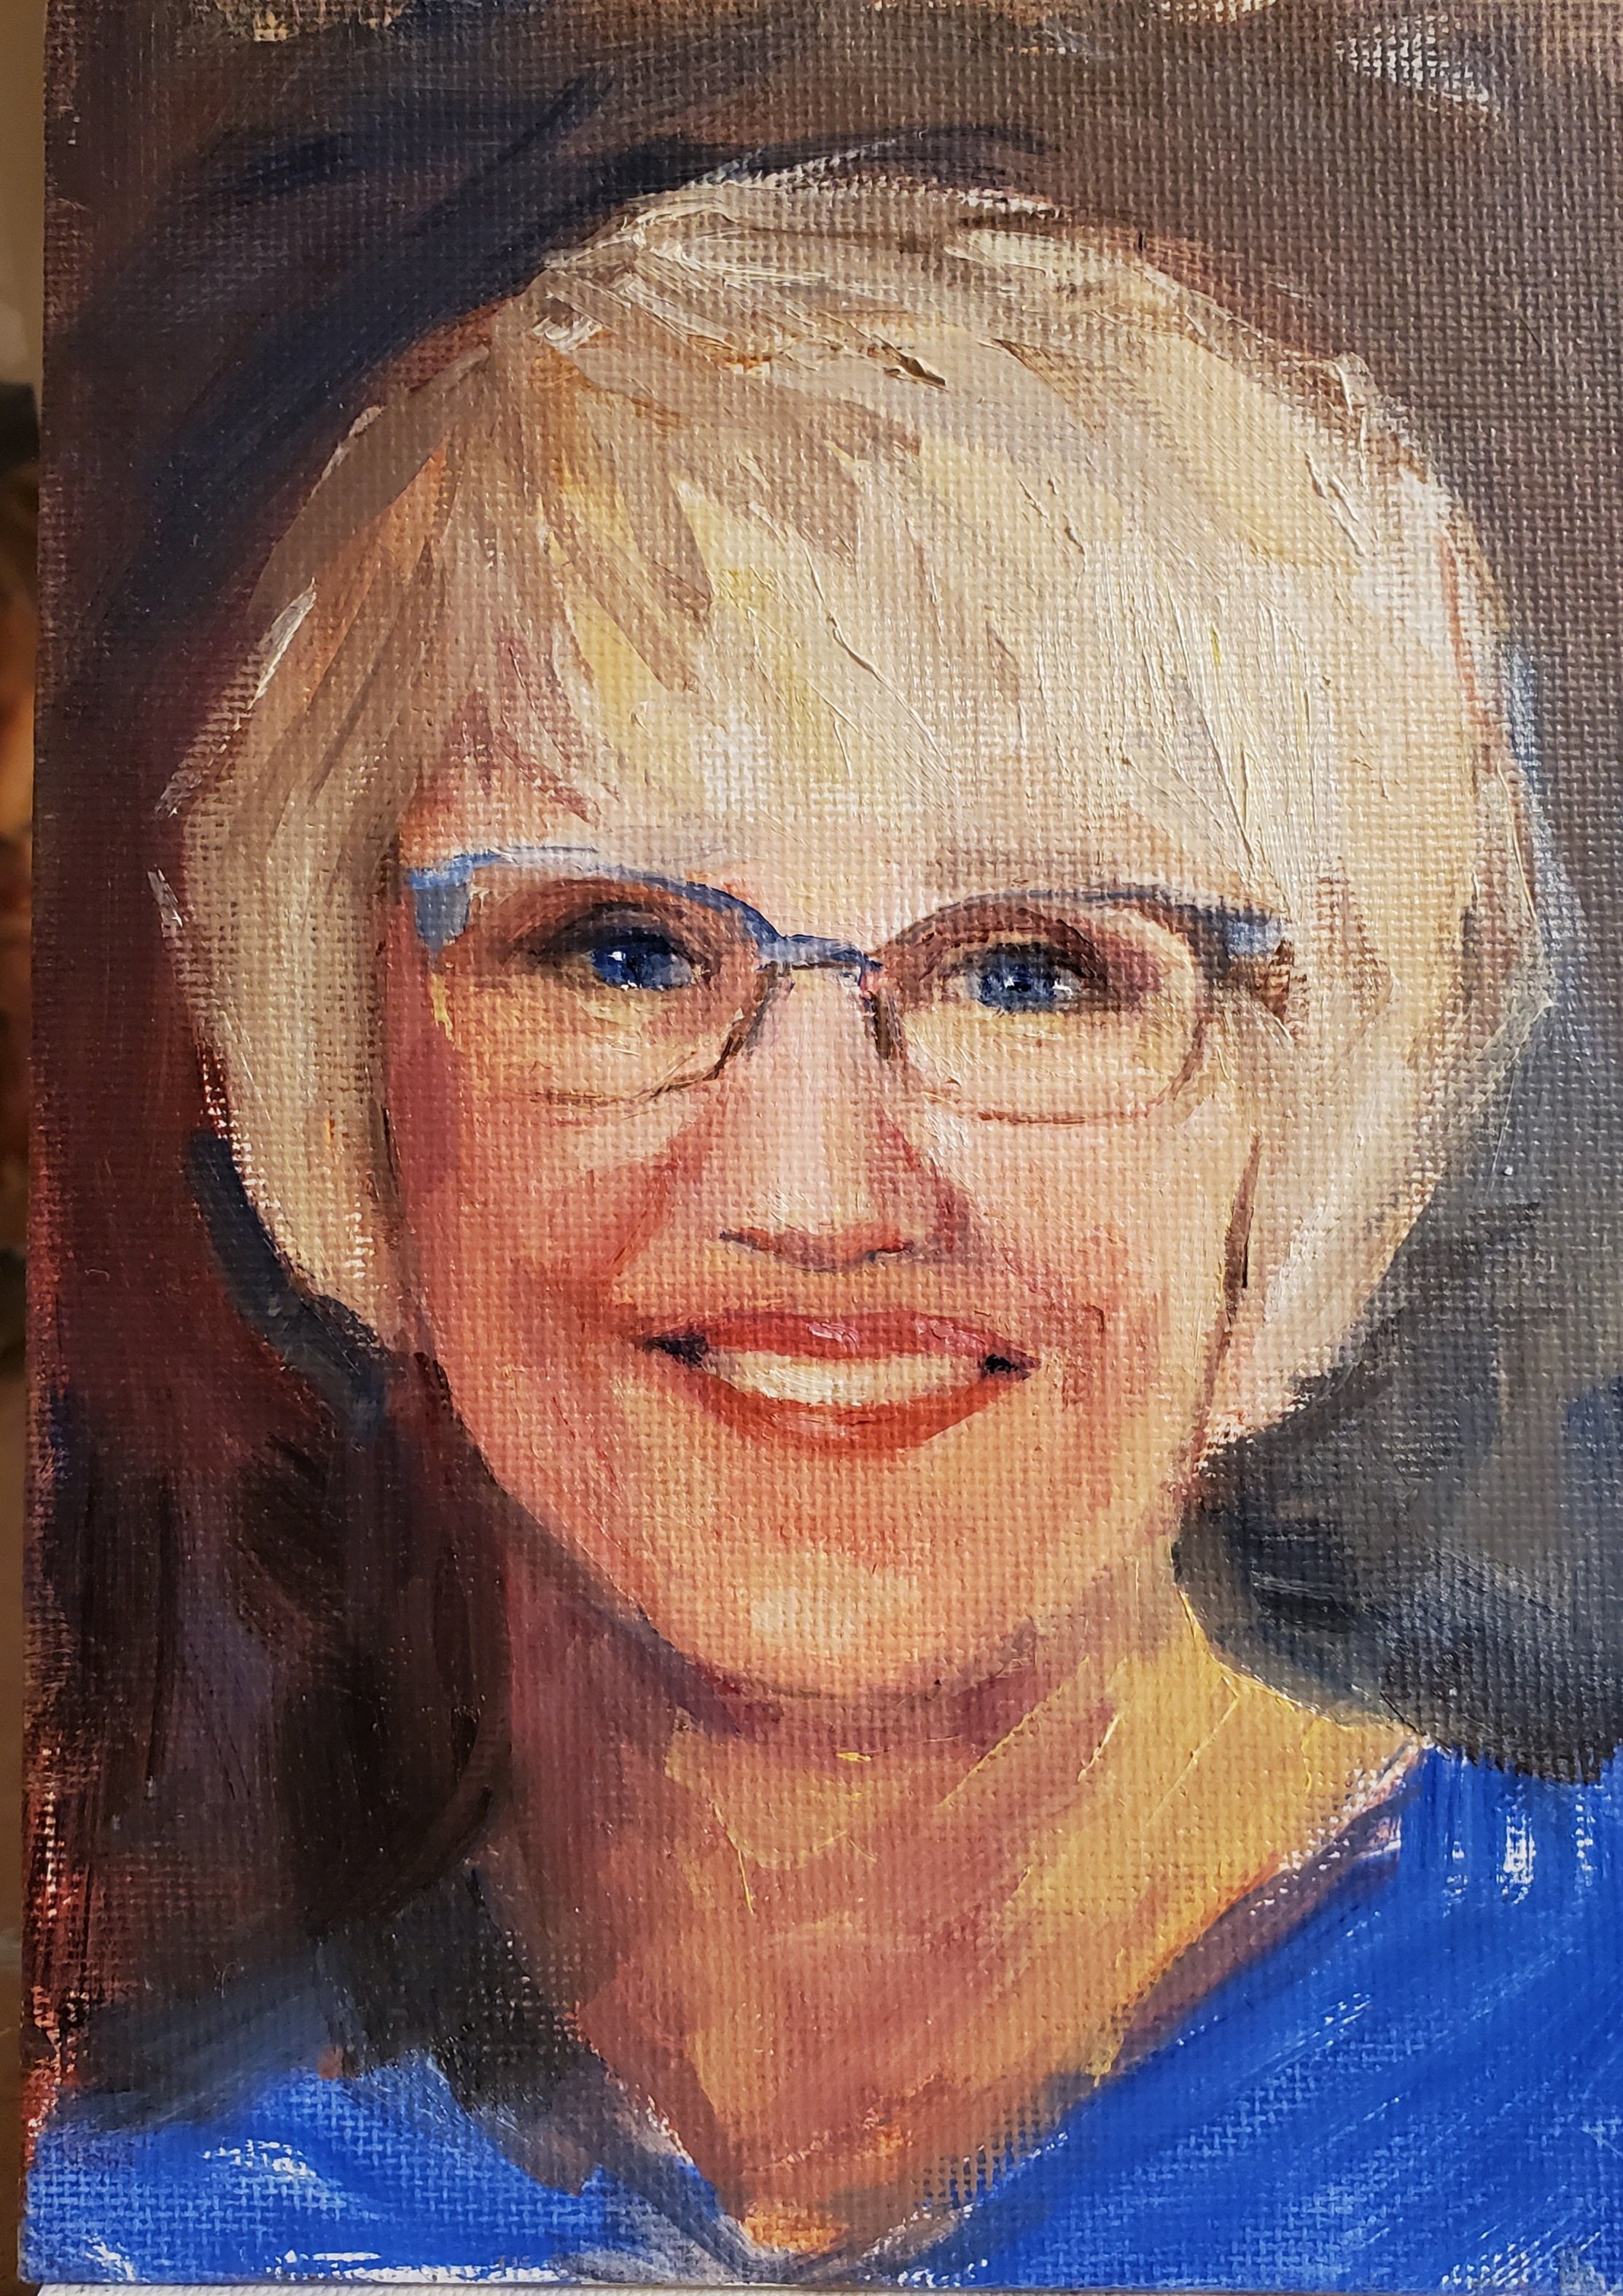 Kathy-mini portrait  5x7 oil